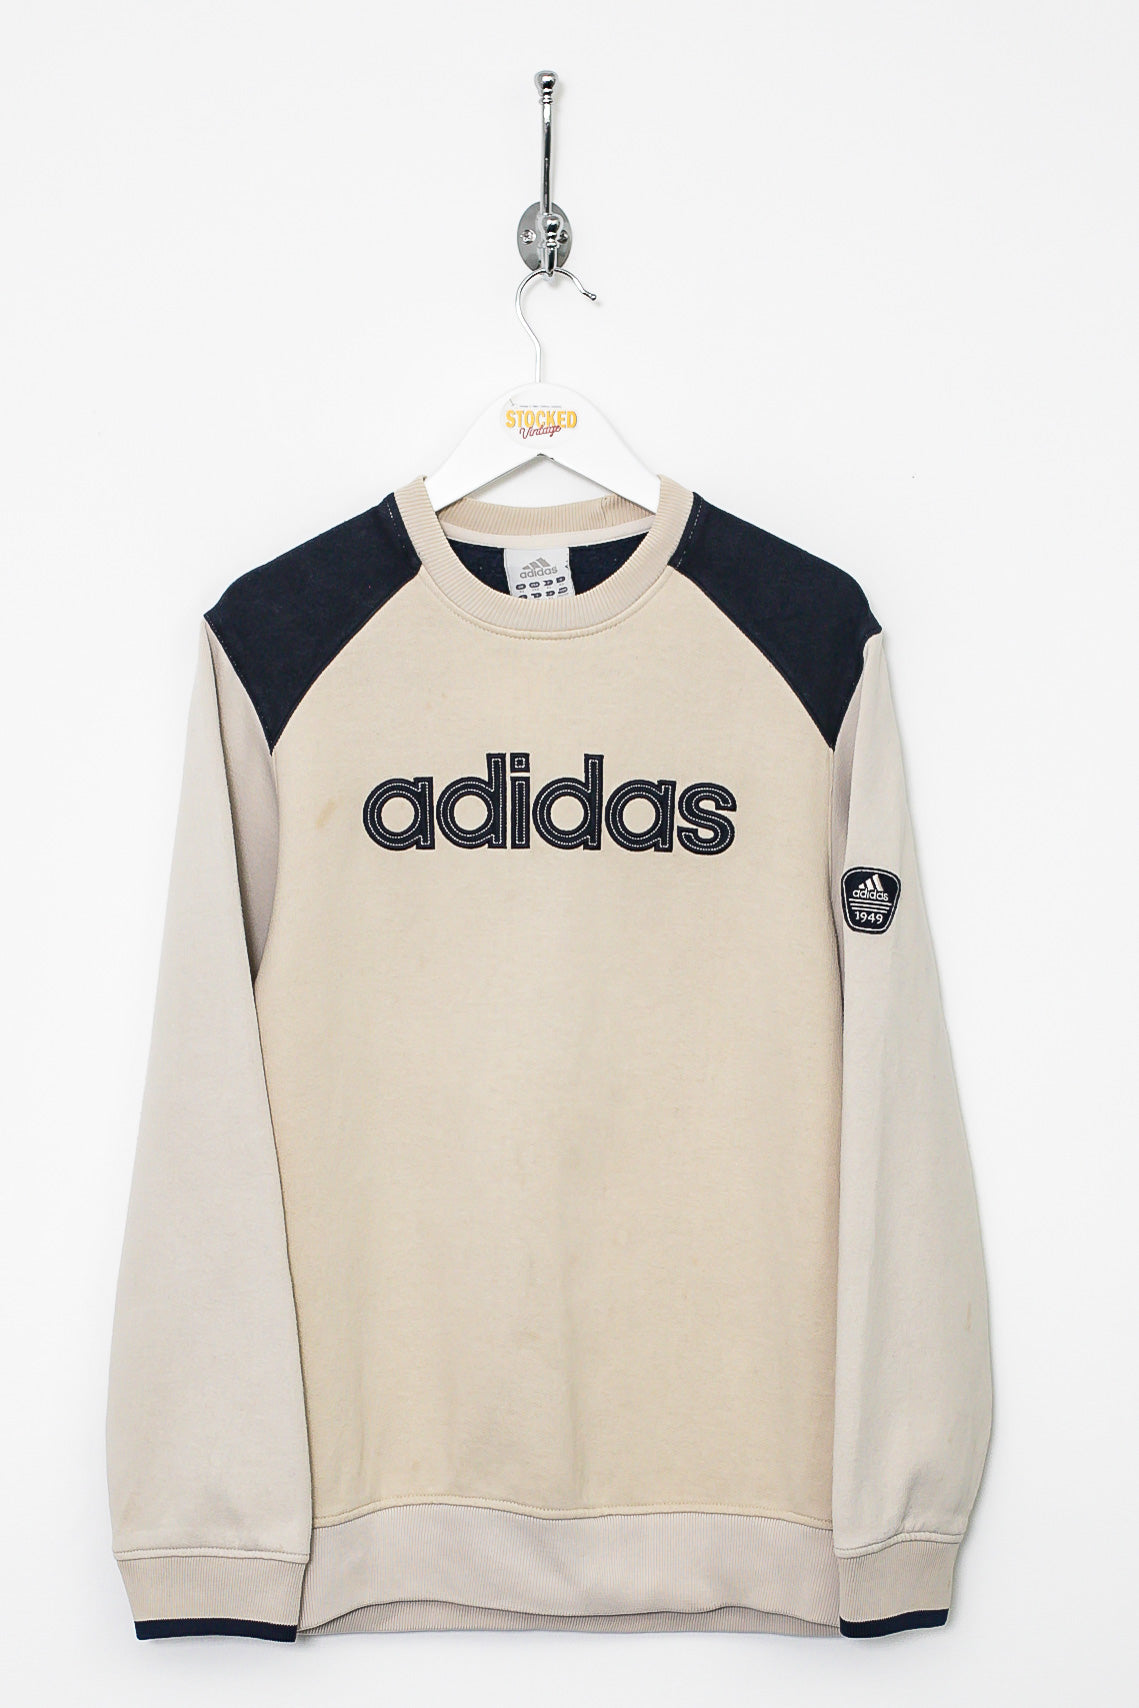 00s Adidas Sweatshirt (XS)